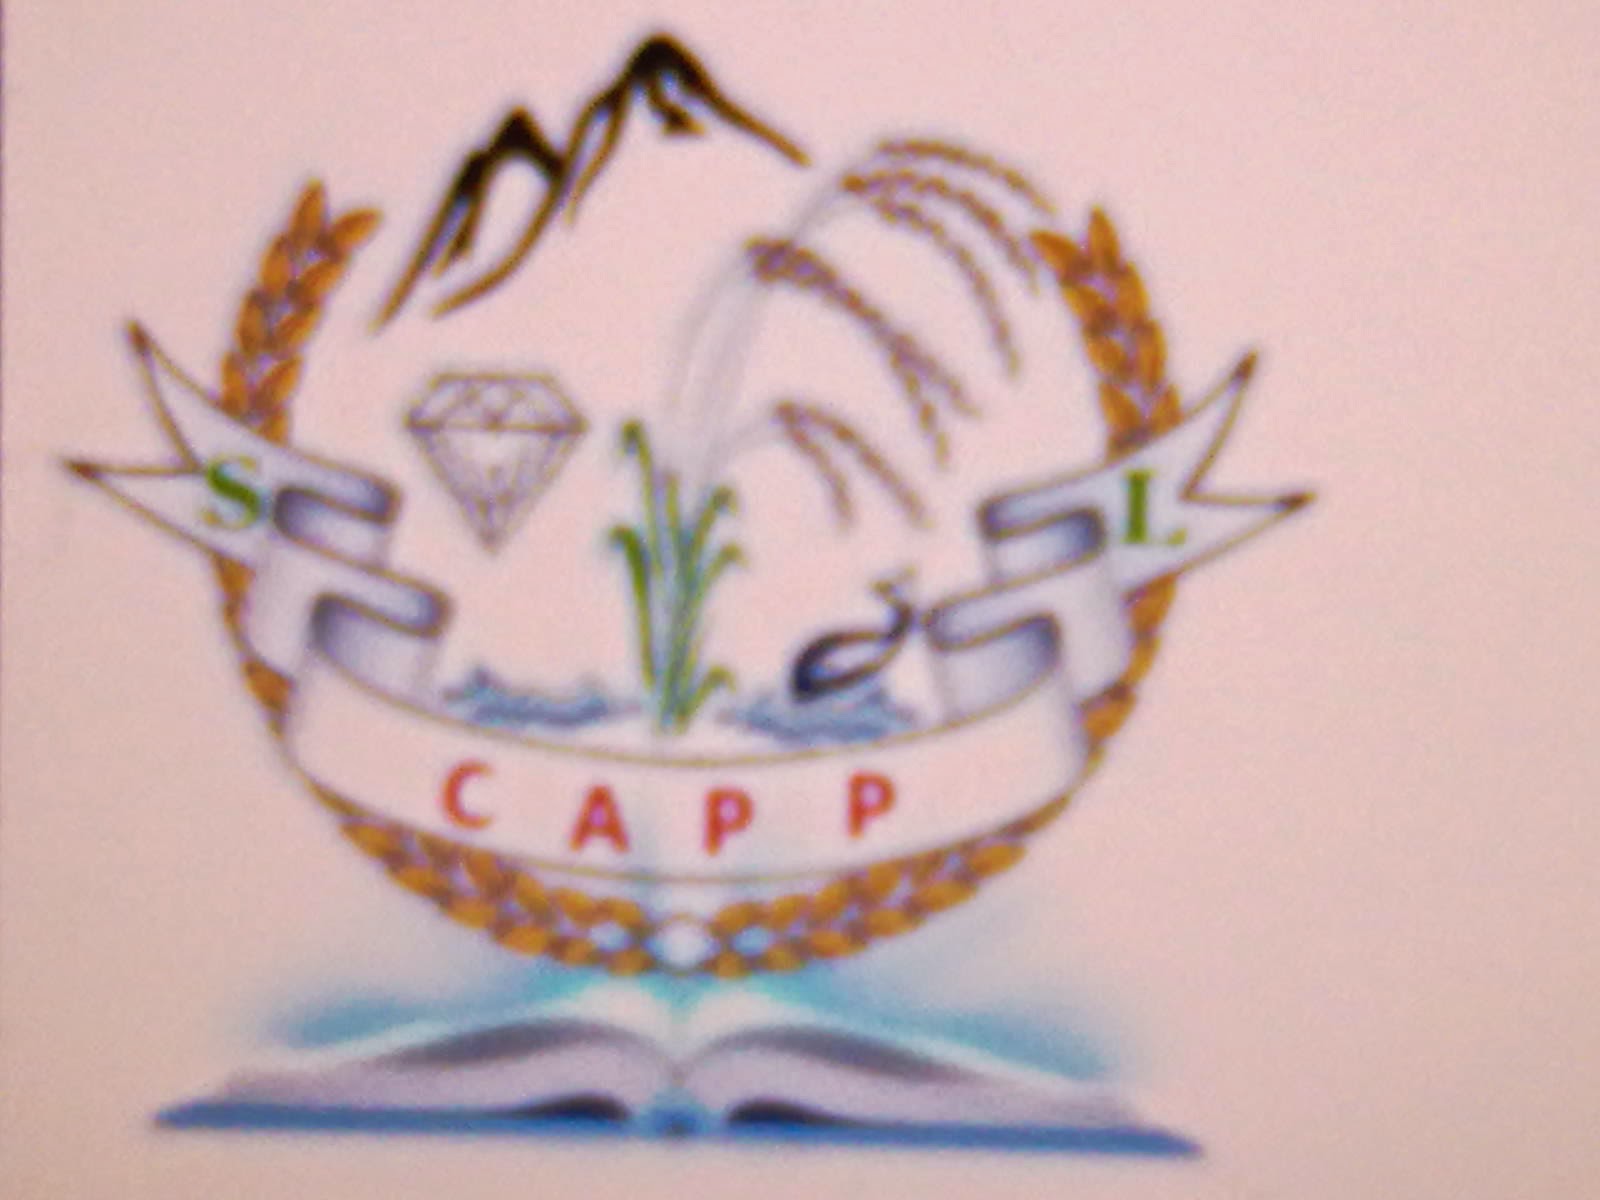 CAPP-SL